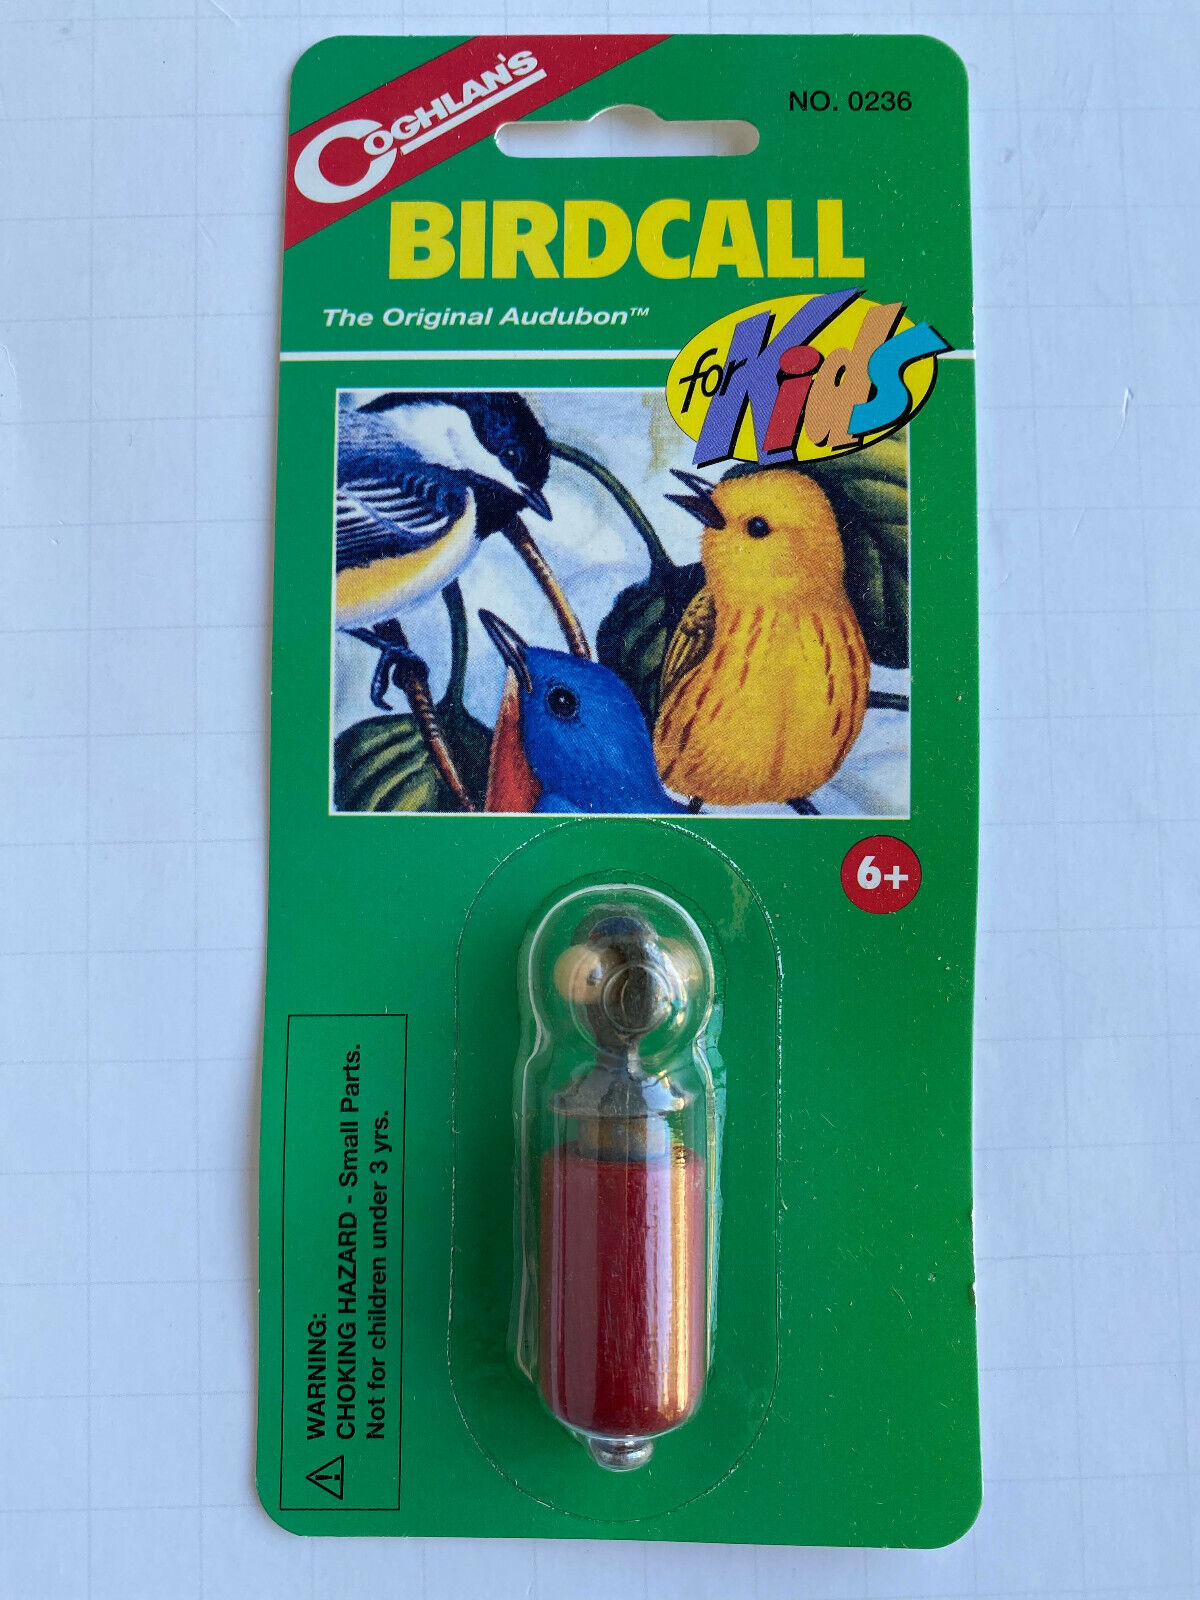 Coghlan's Birdcall 0236 - The Original Audubon bird call remarkable birchwood me